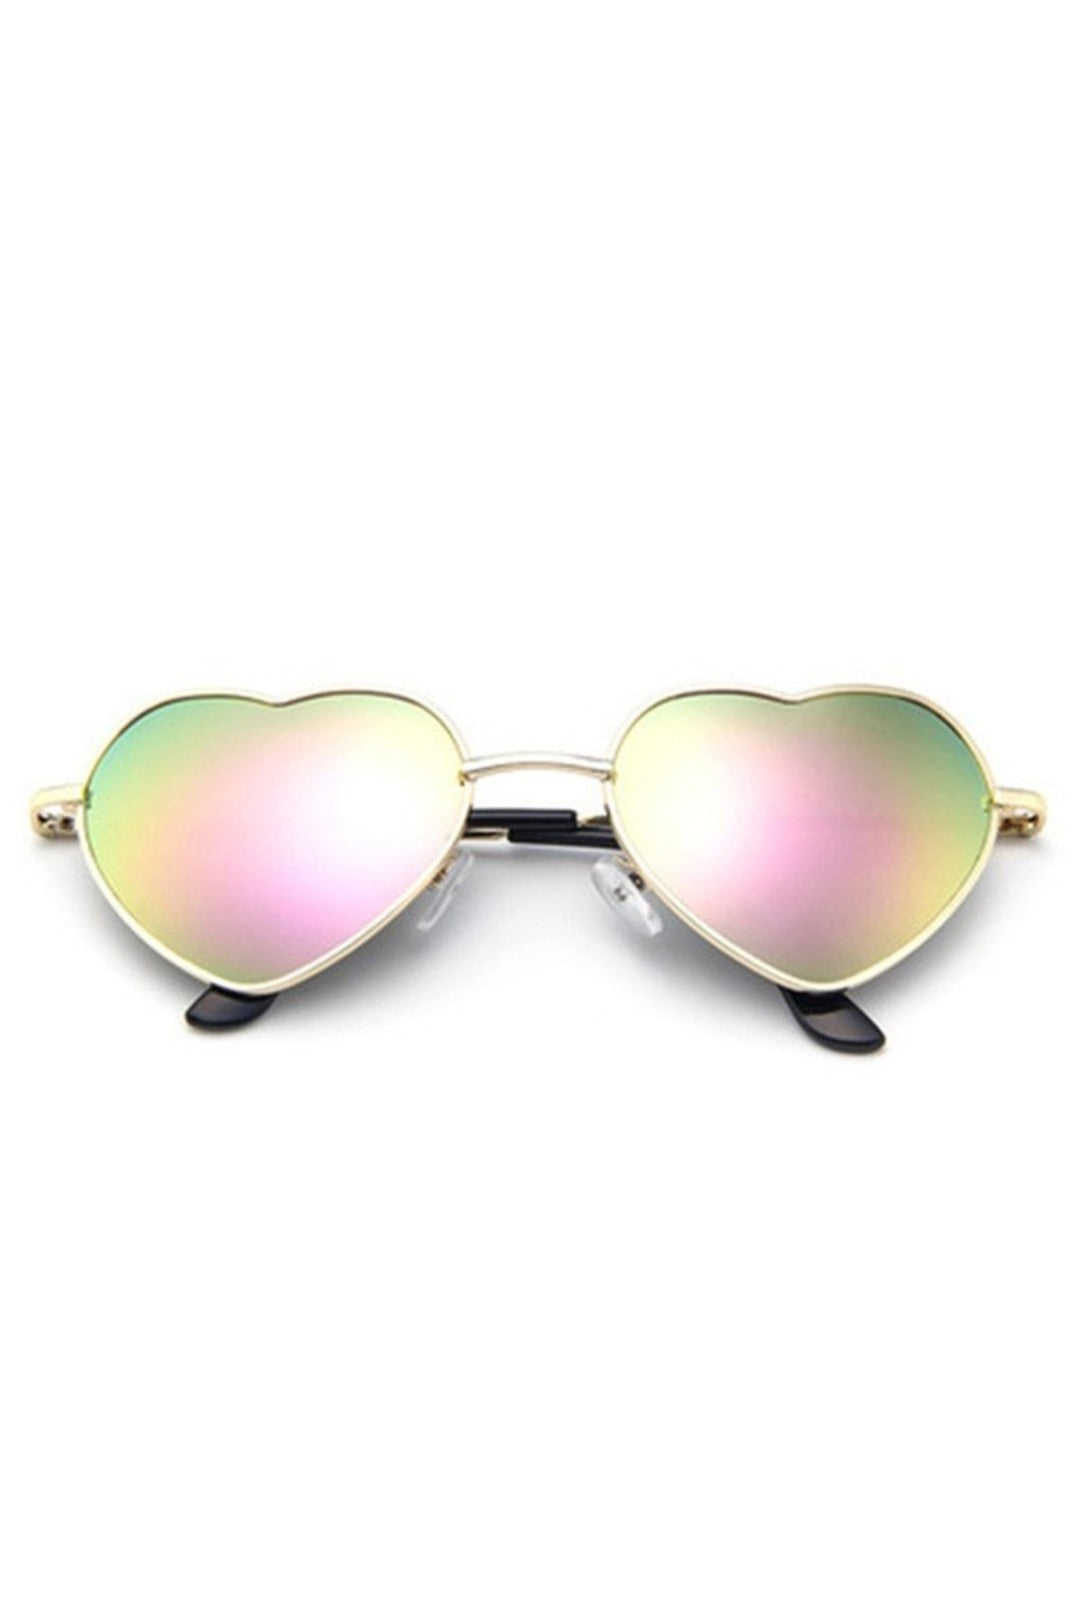 Reflective Green Fashion Heart Glasses